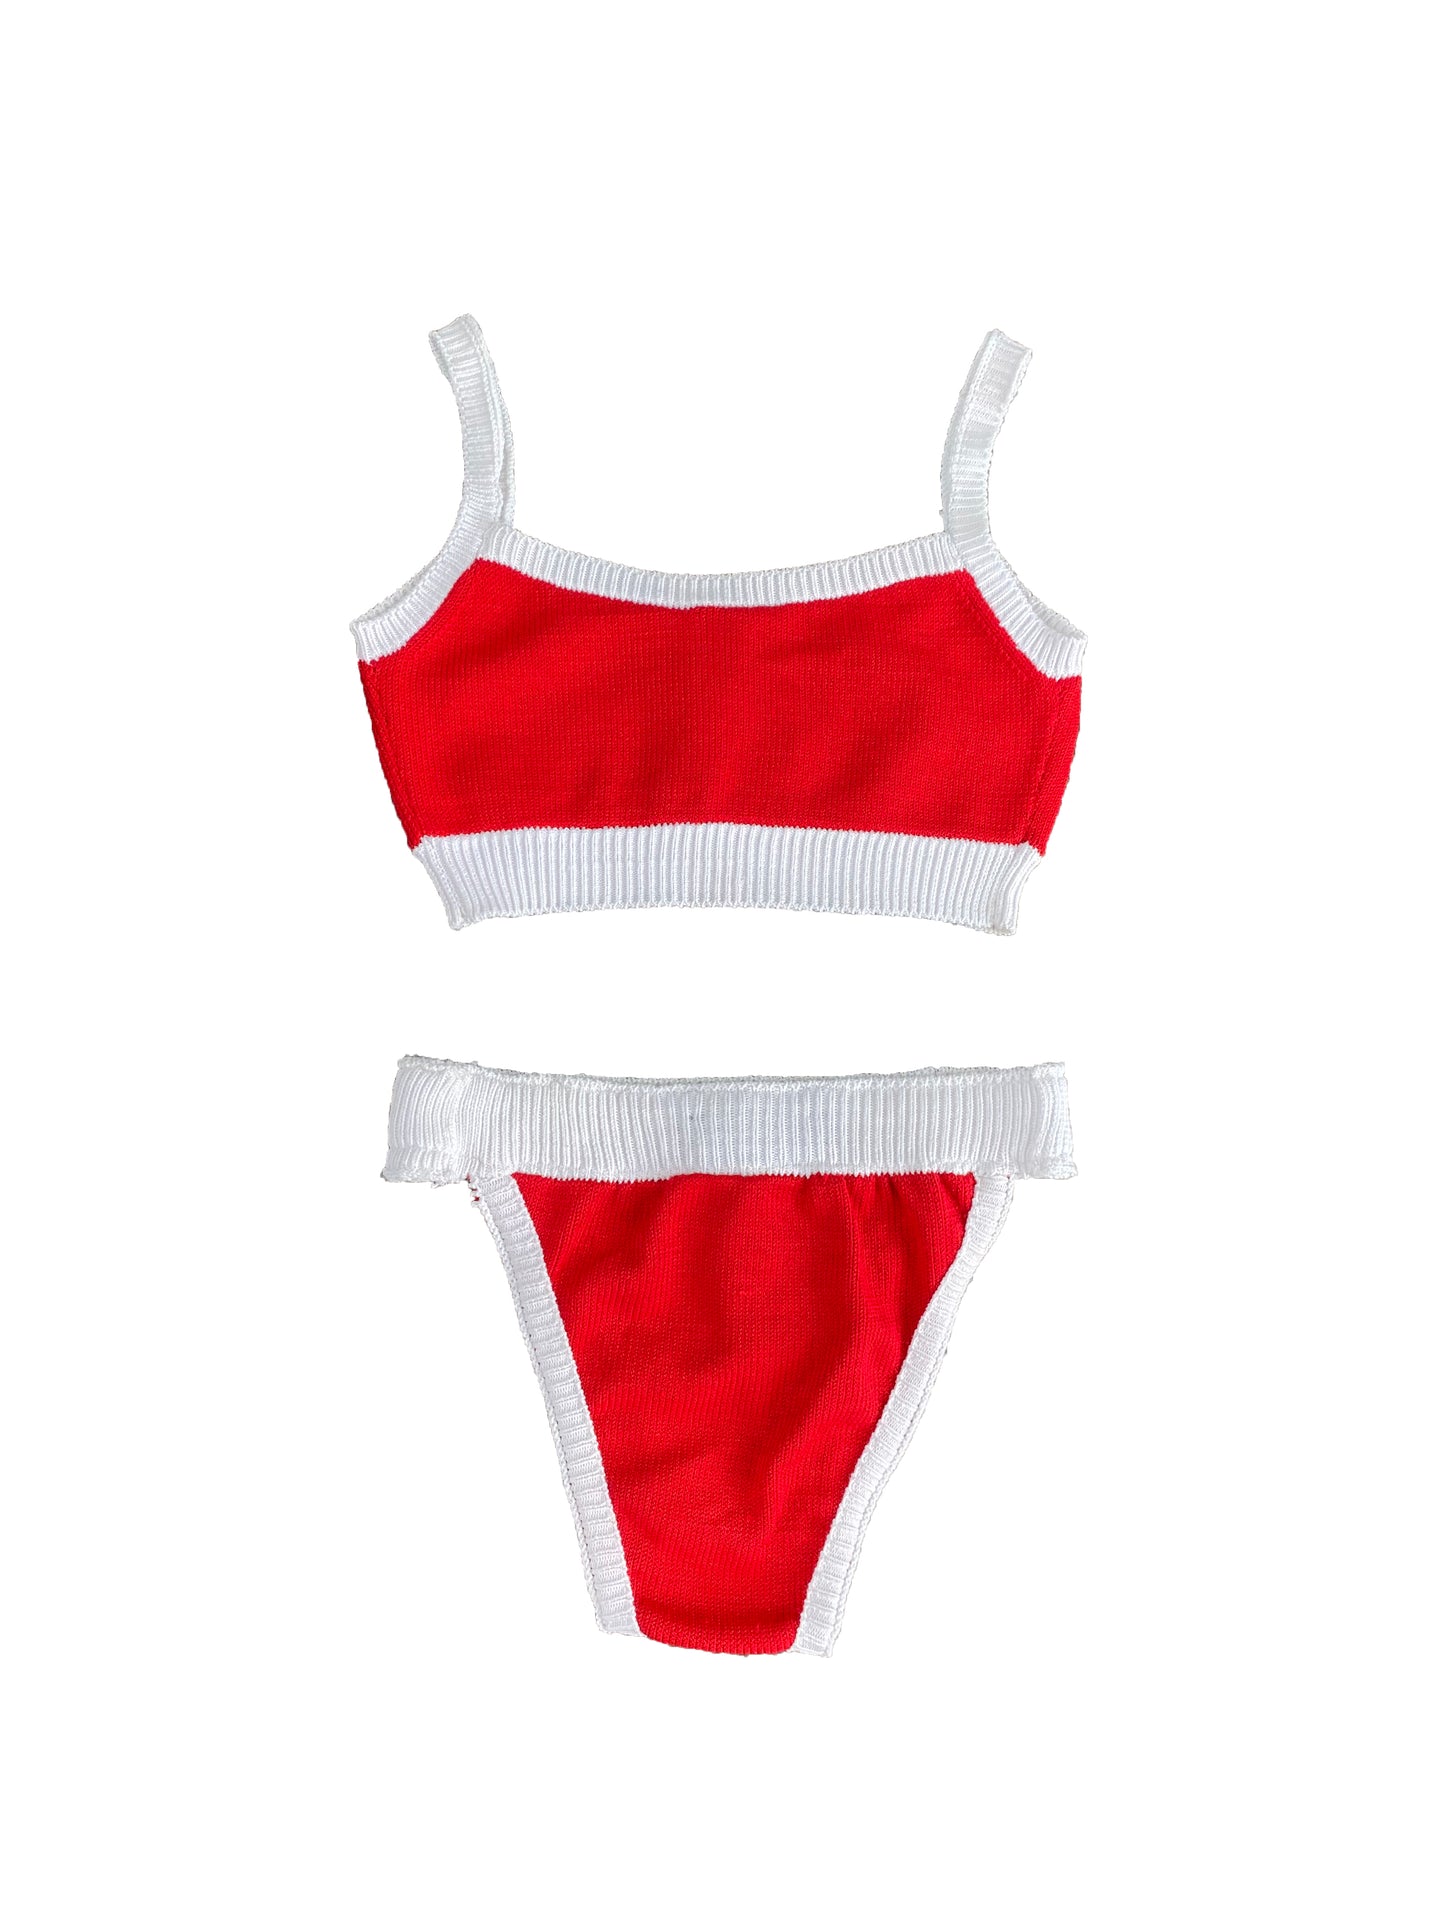 Red & White Knitted Bikini Set